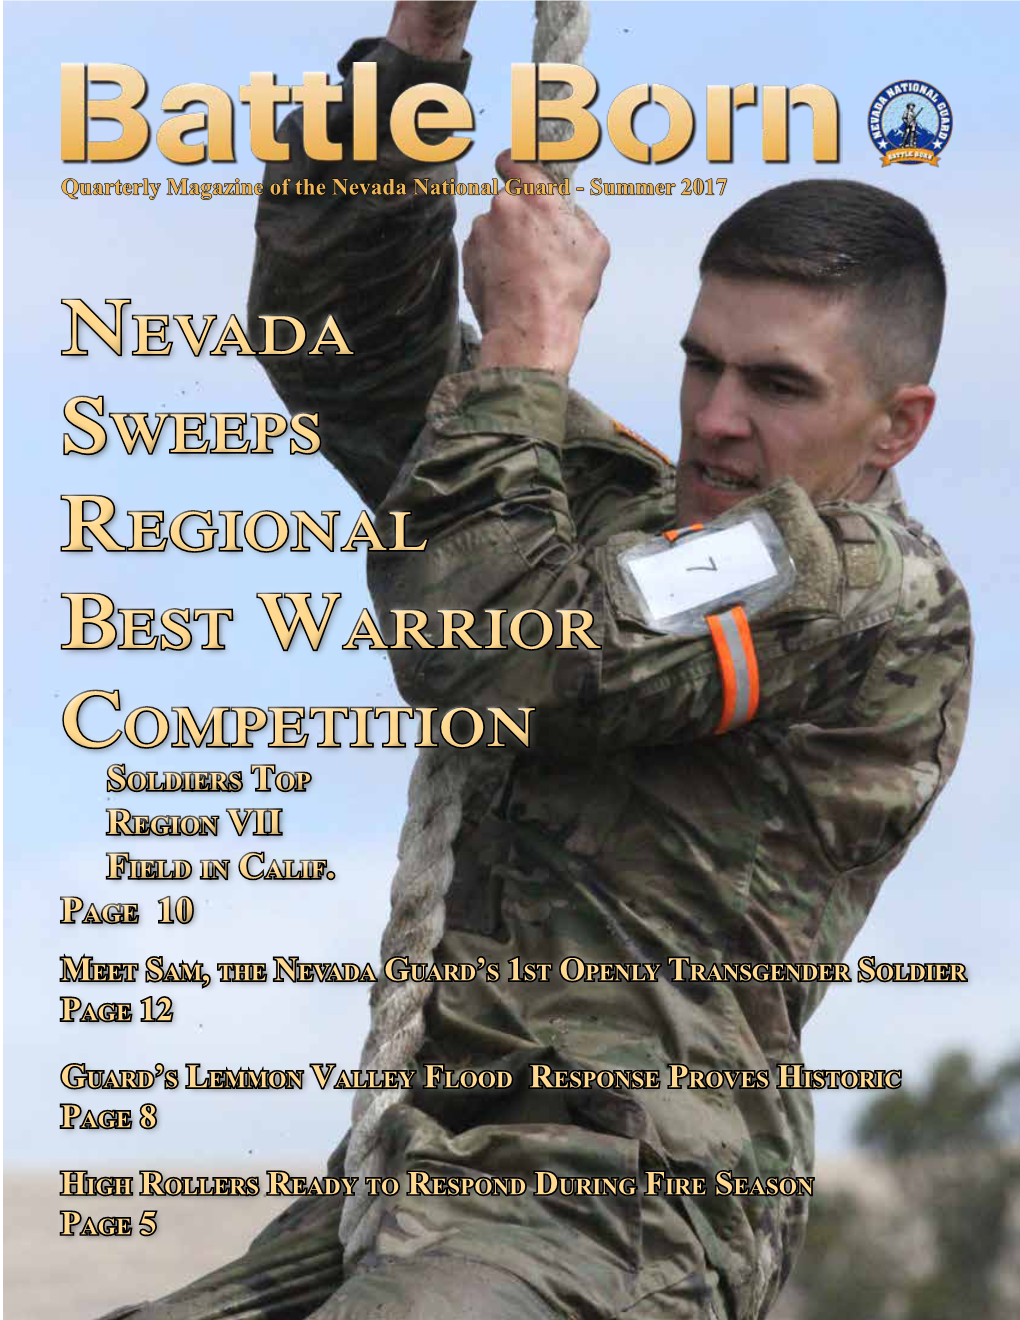 Nevada Sweeps Regional Best Warrior Competition Soldiers Top Region VII Field in Calif